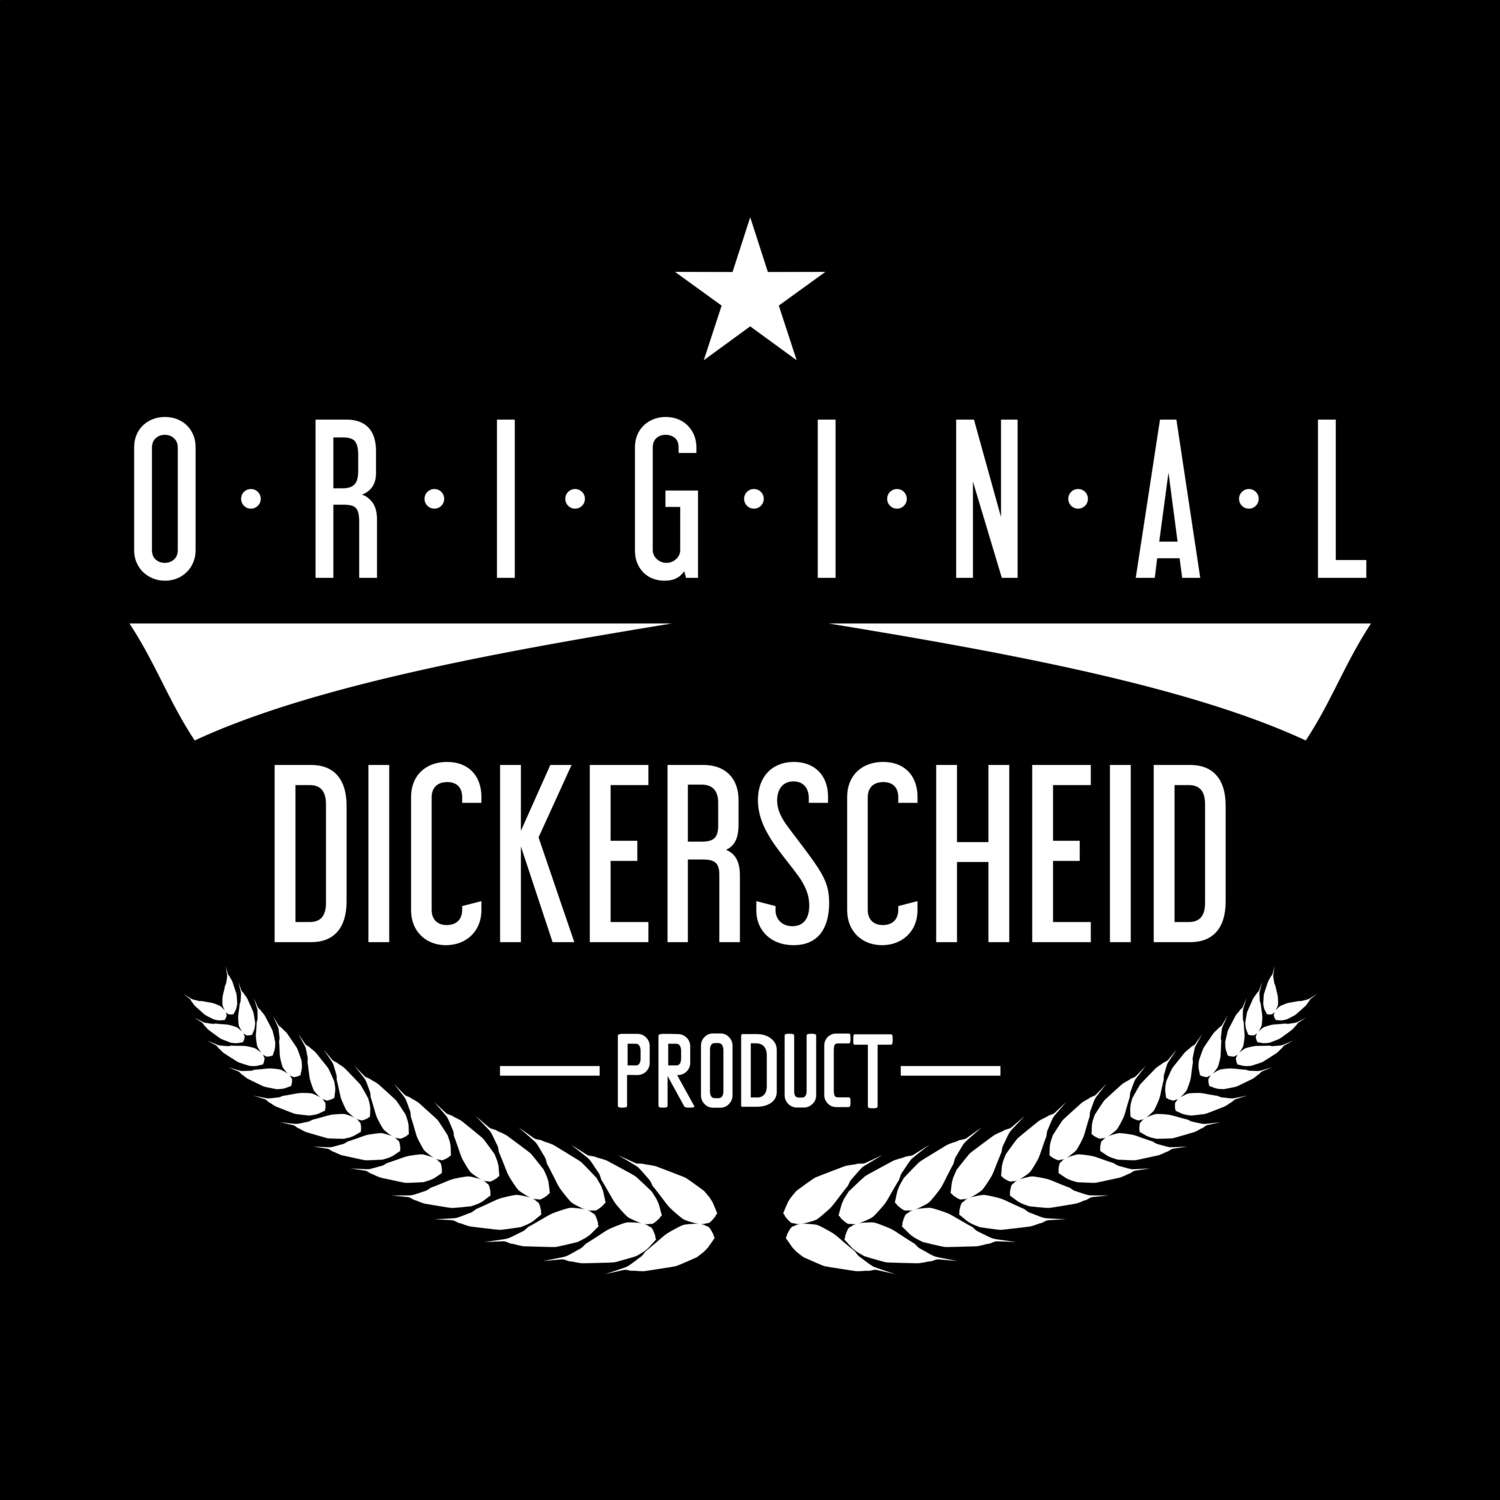 Dickerscheid T-Shirt »Original Product«